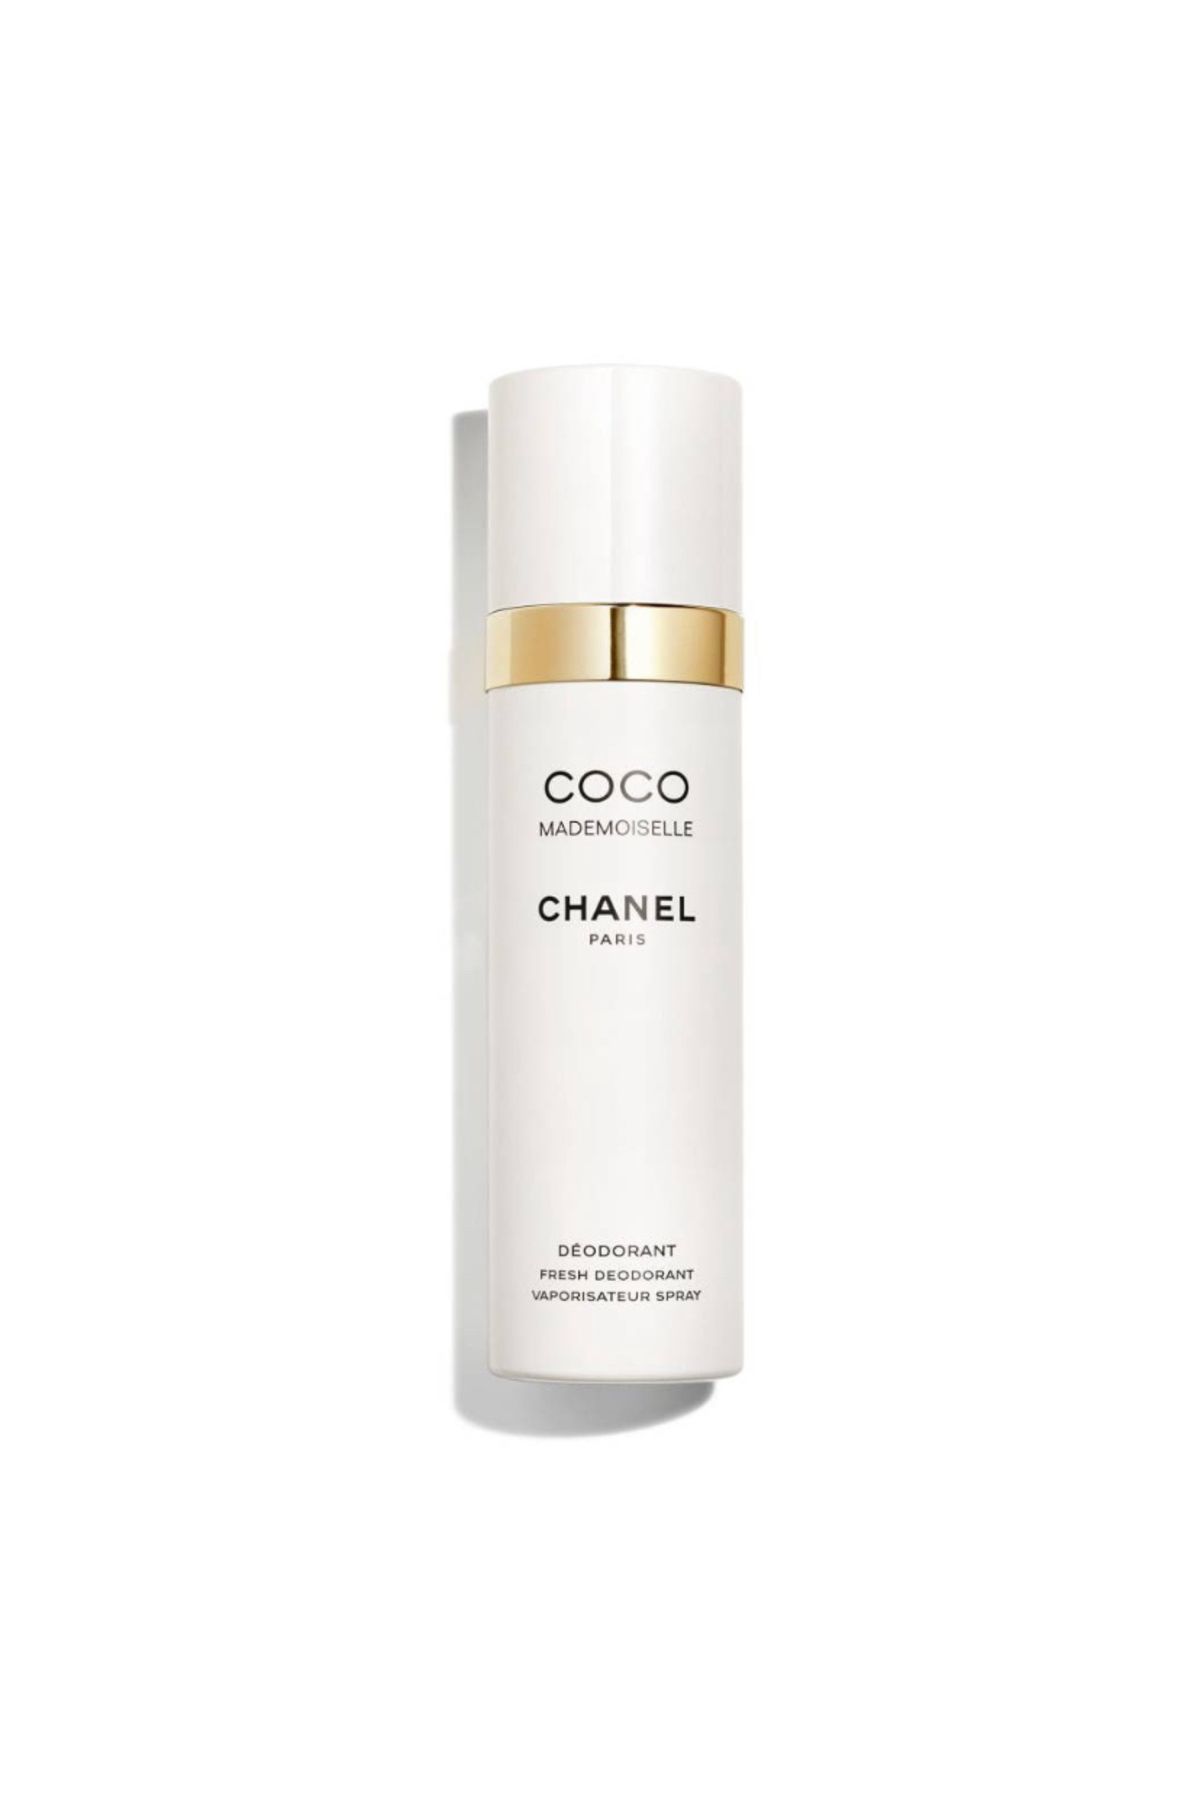 Chanel Coco Mademoıselle Parfum 100ml Pinkestcosmetics